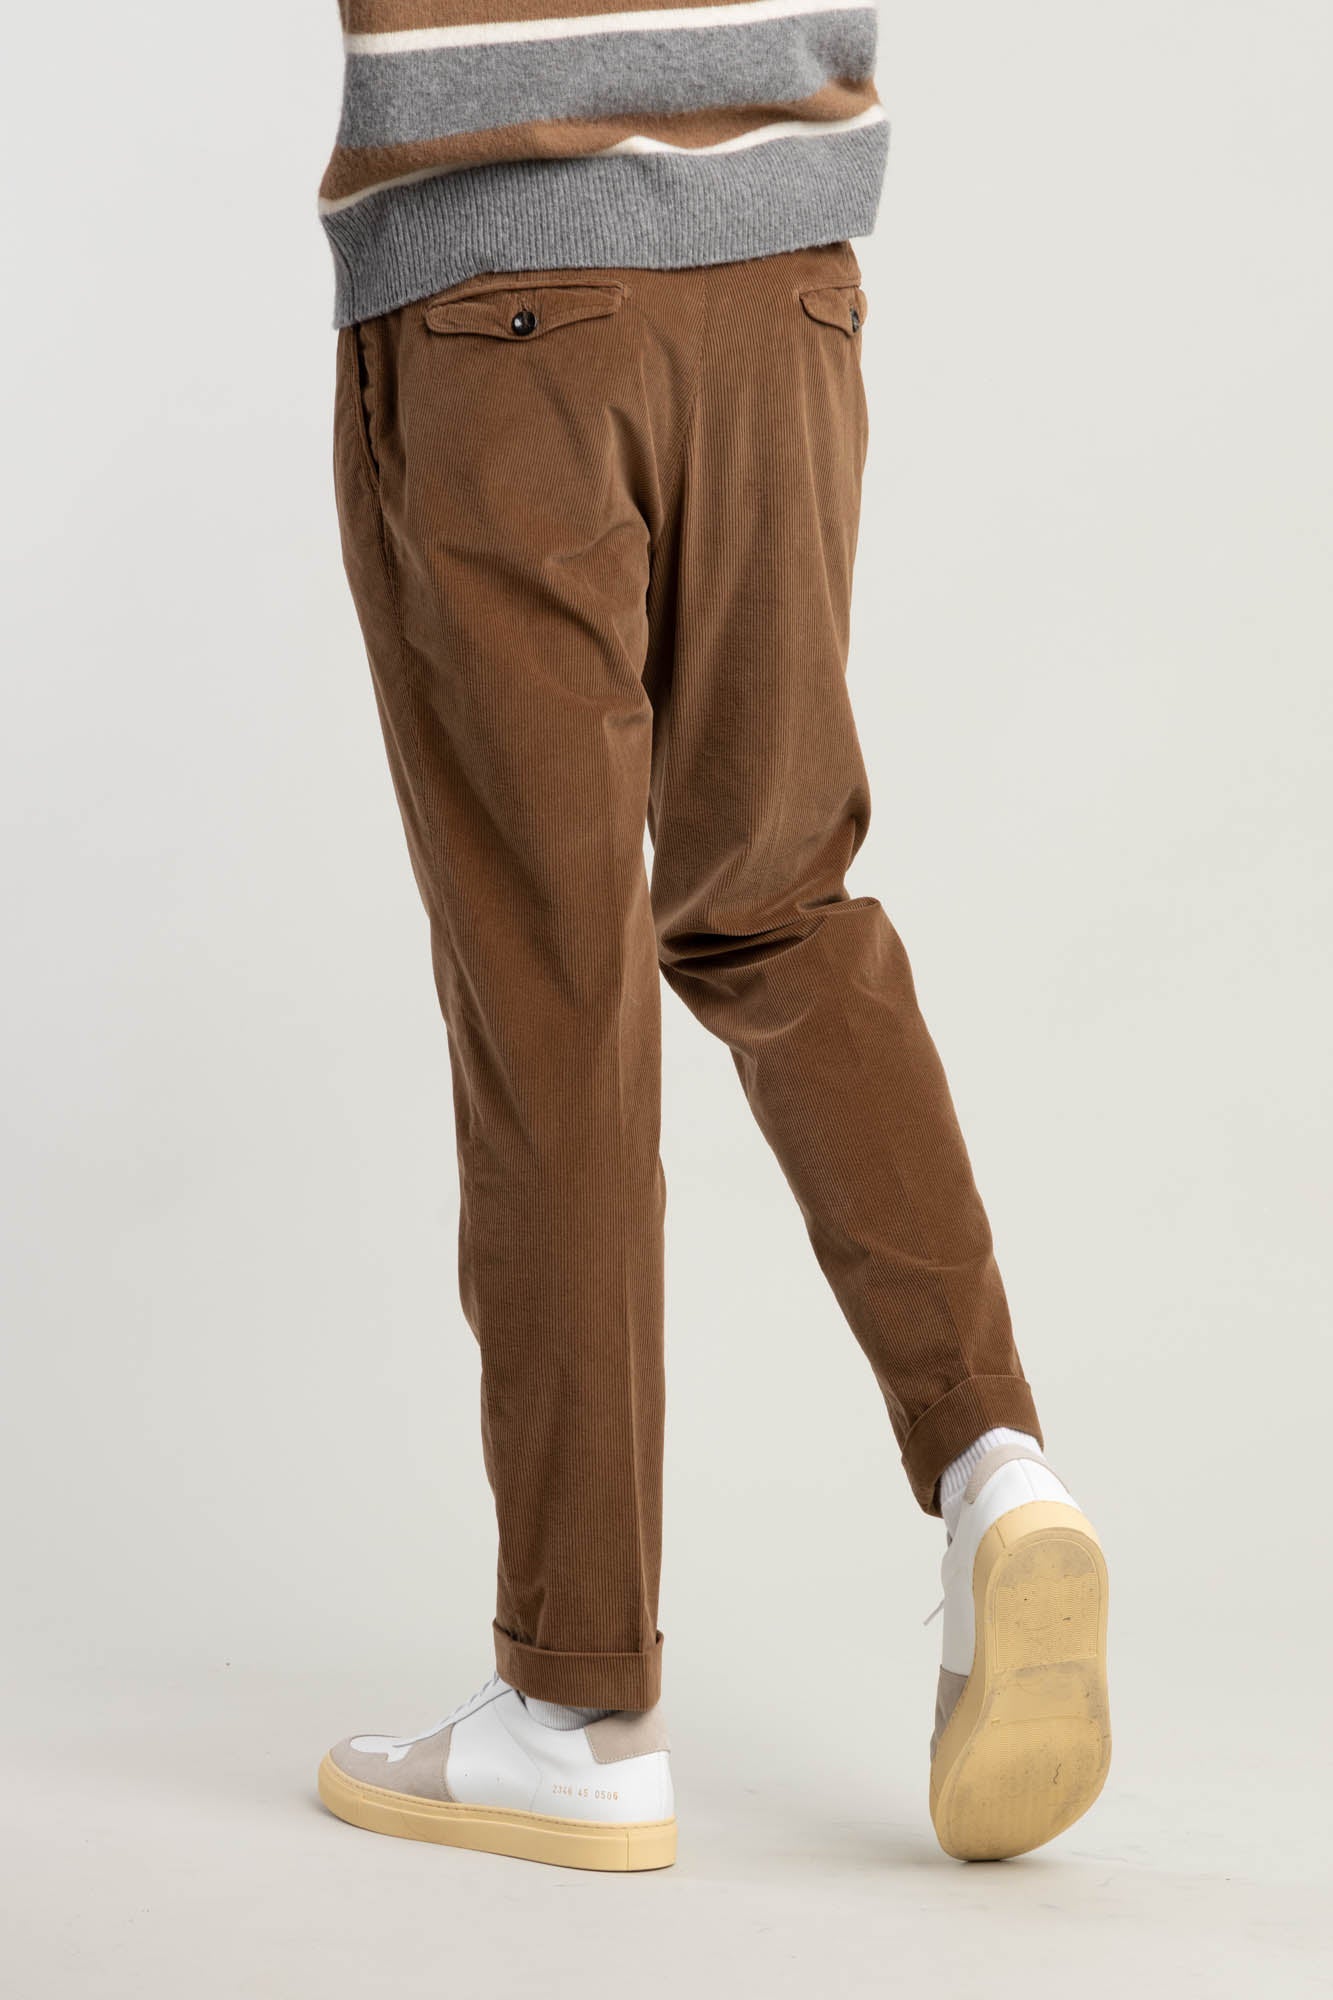 Jake Light Brown Pleated Buckled Slim Pants | Mens pleated pants, Pants  outfit men, Brown pants men